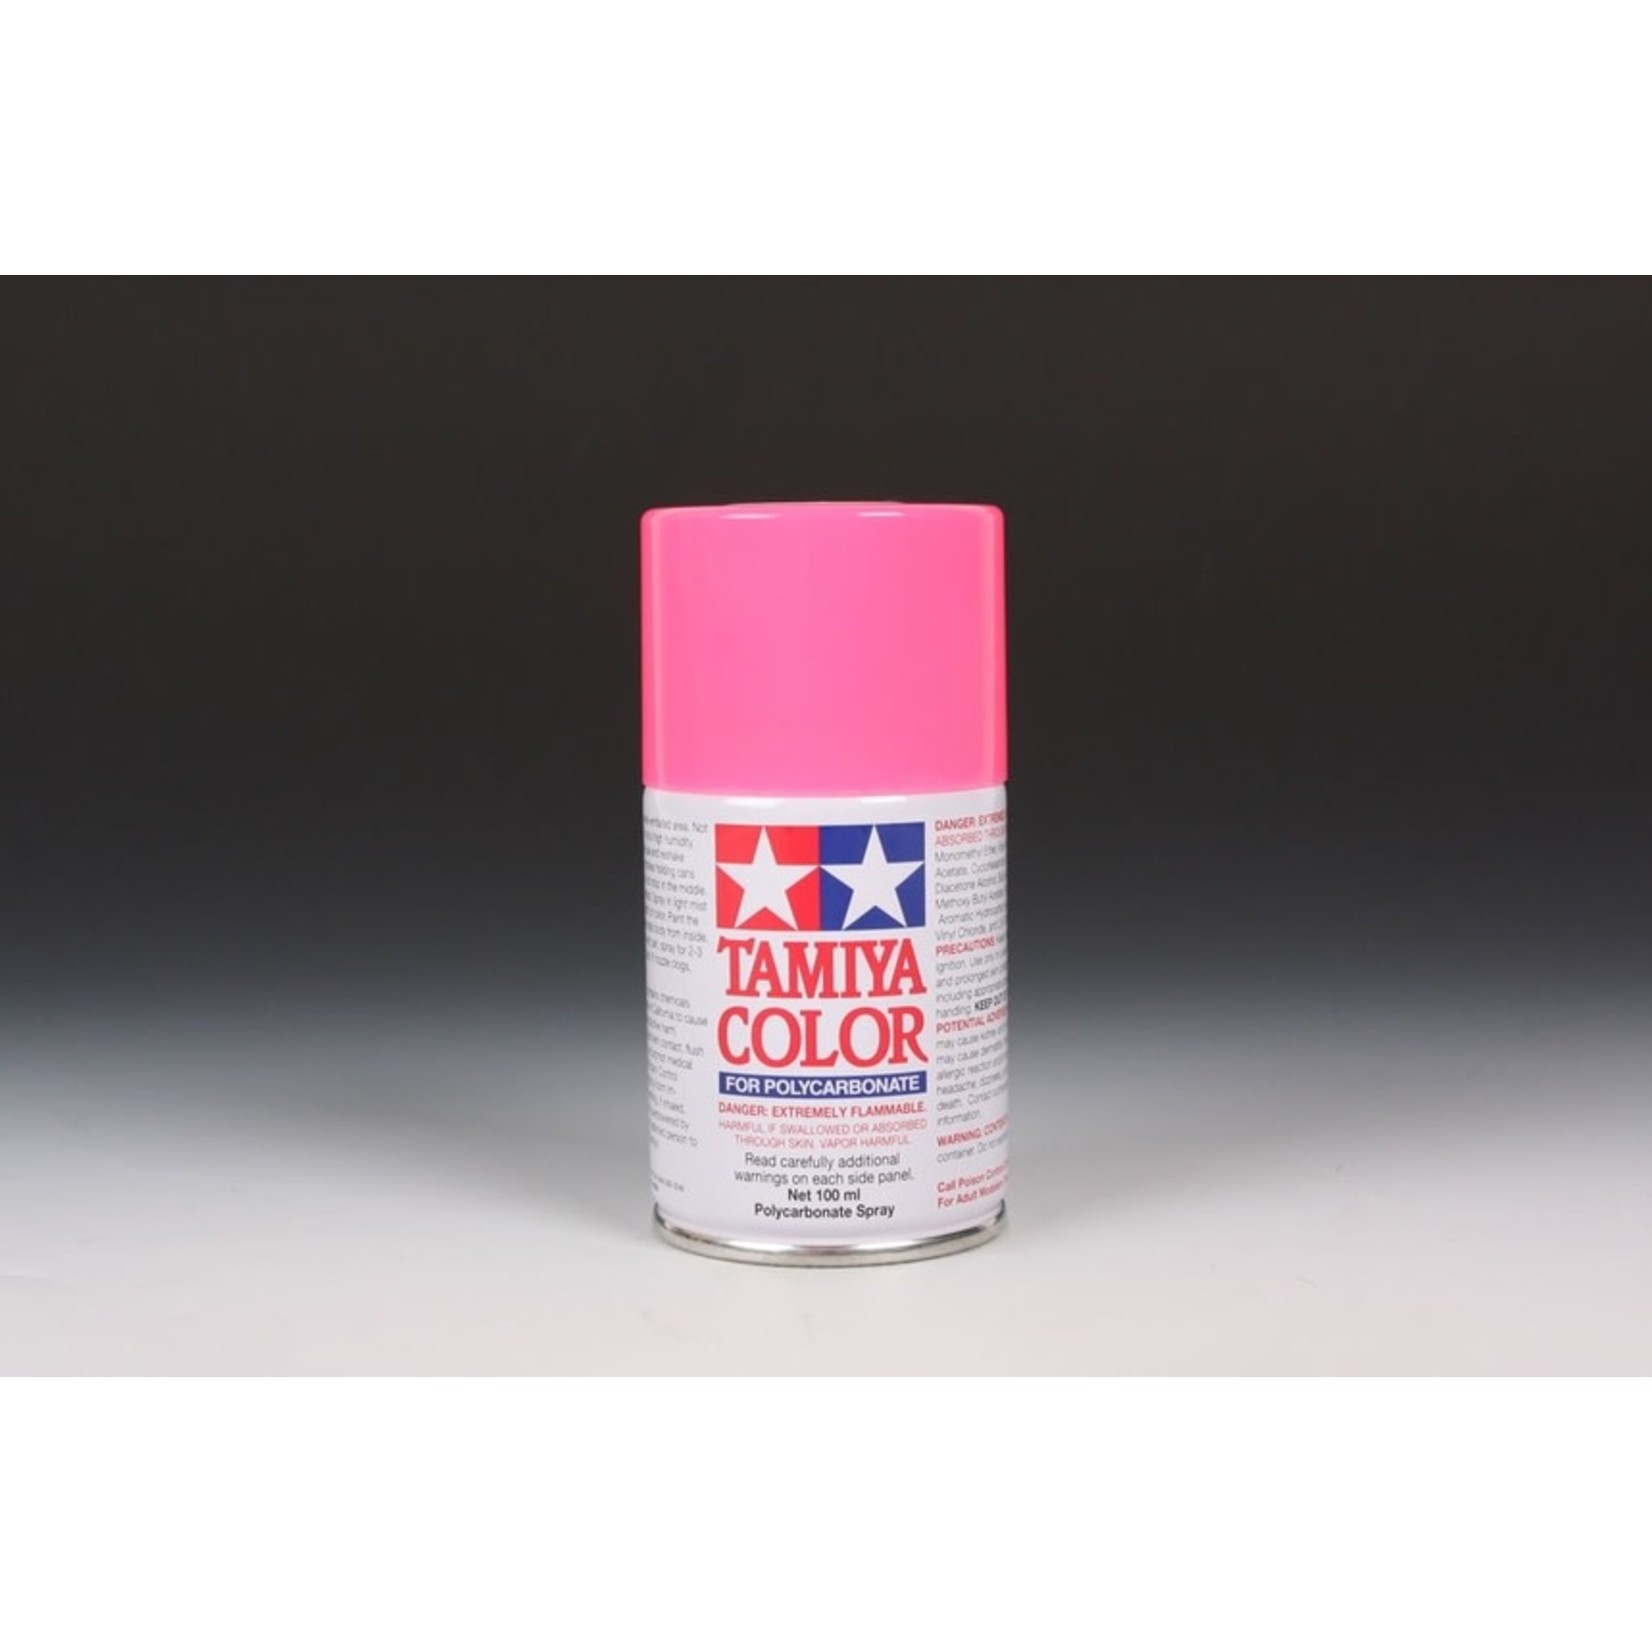 Tamiya TAM86029 Tamiya Polycarbonate PS-29 Fluorescent Pink